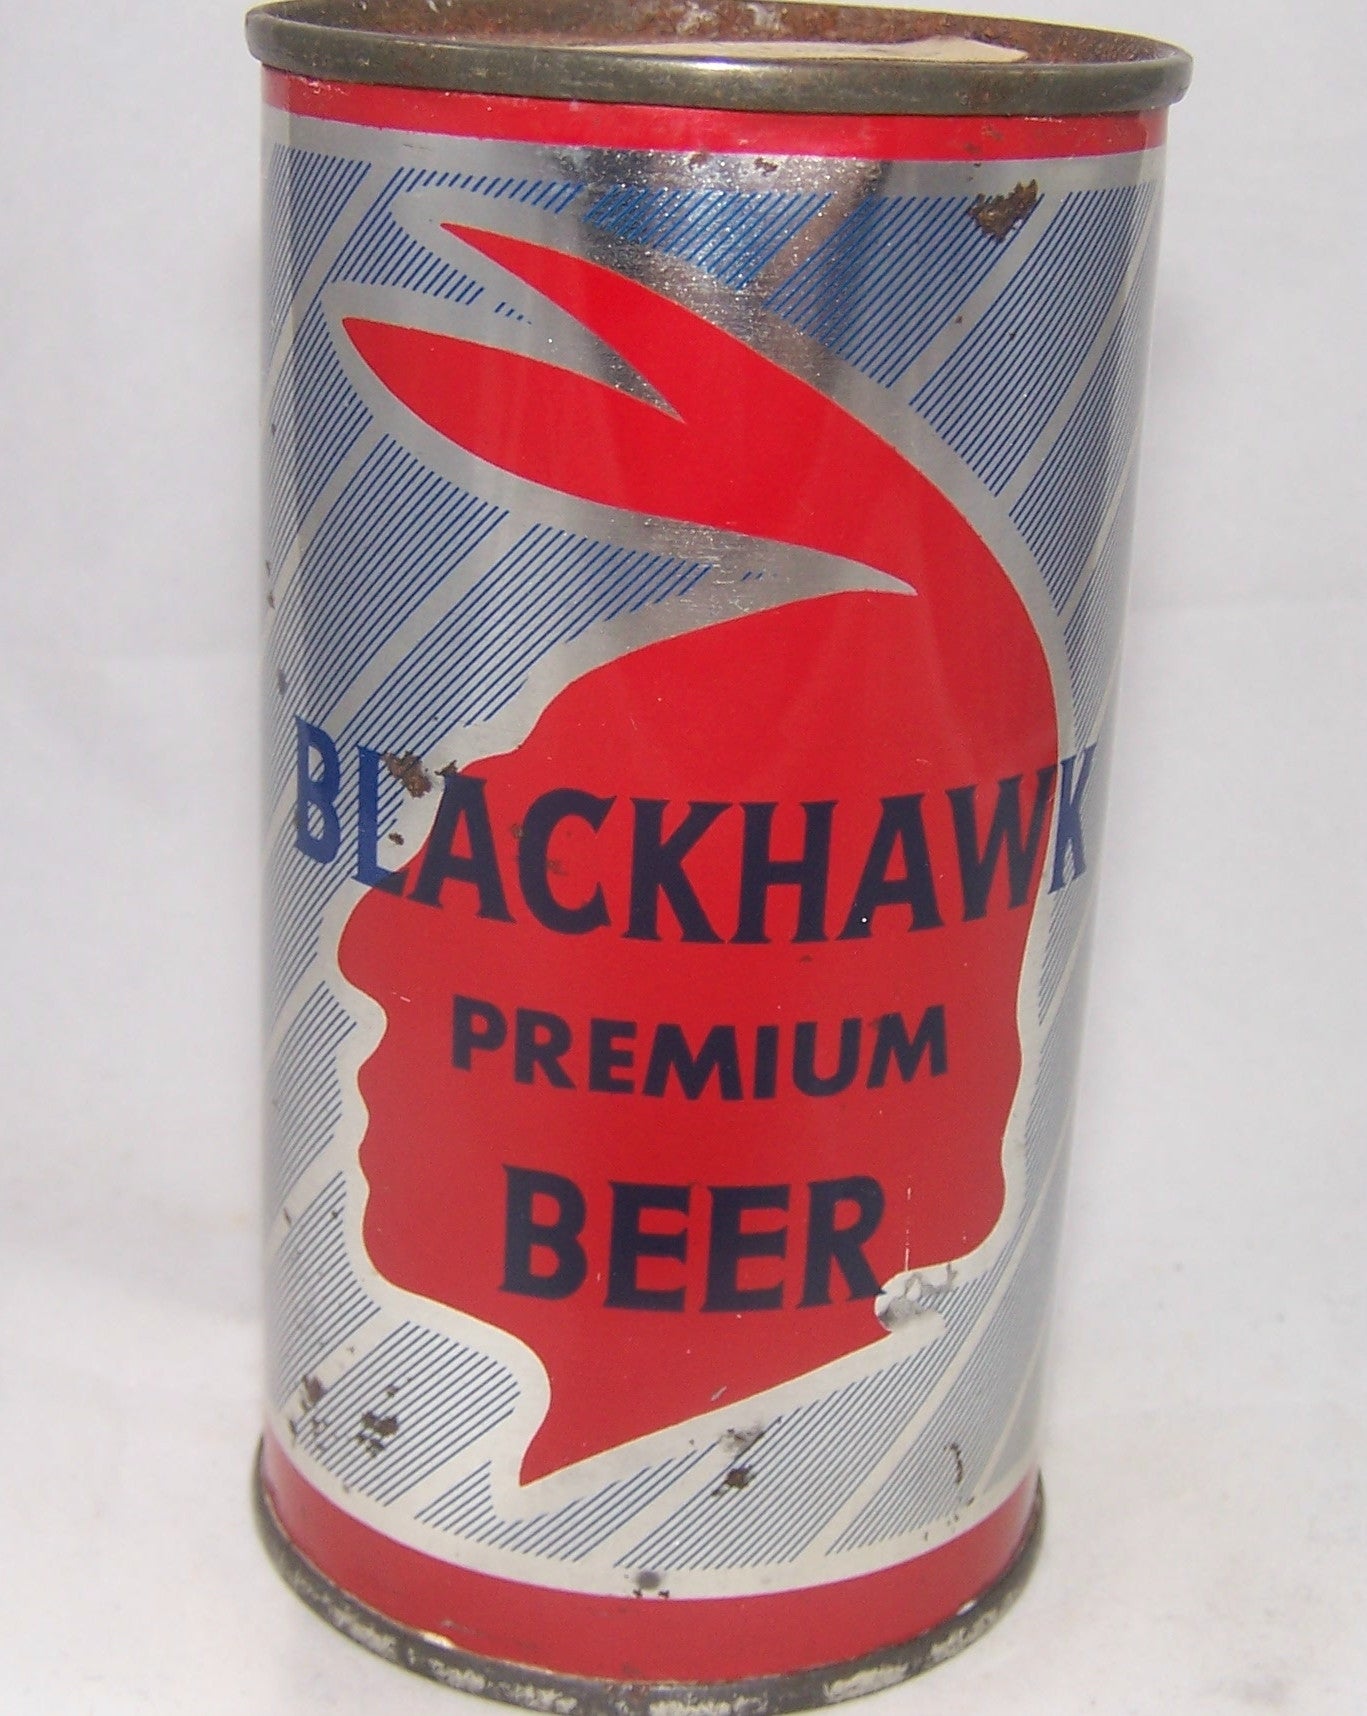 Blackhawk Premium Beer, USBC 38-34, Grade 1- Sold on 12/22/17